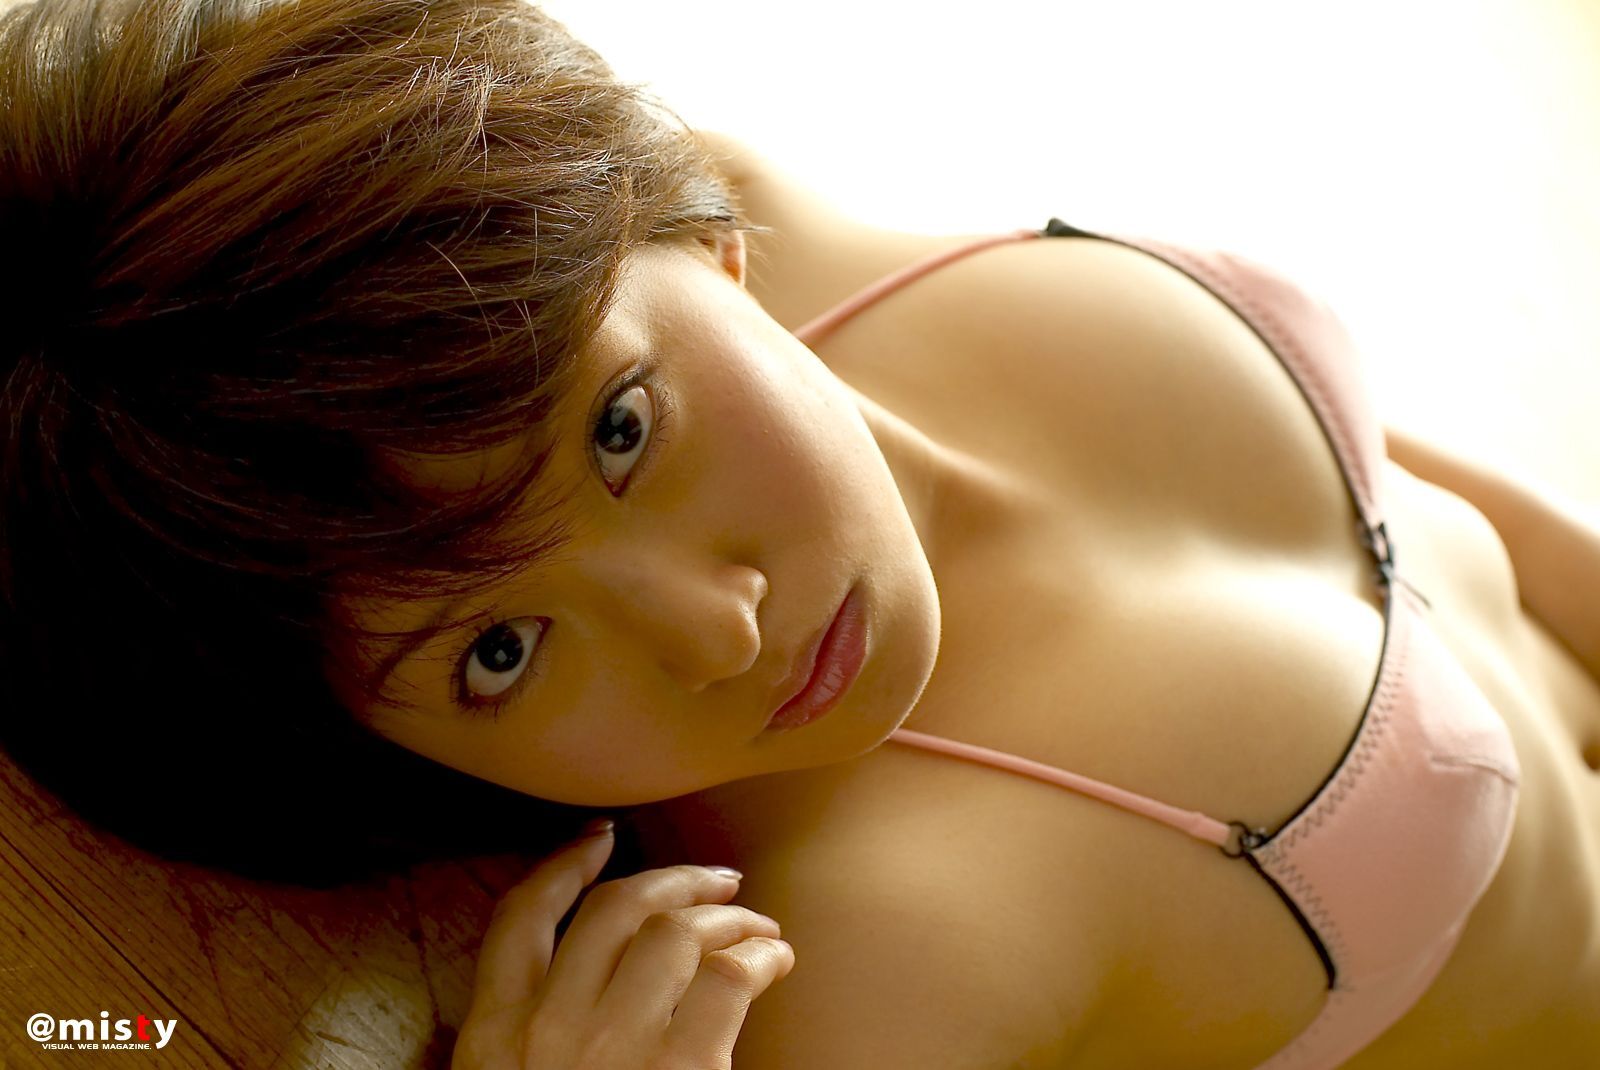 Azuko Otani [@ misty] no.088 - Aiko koyatsu